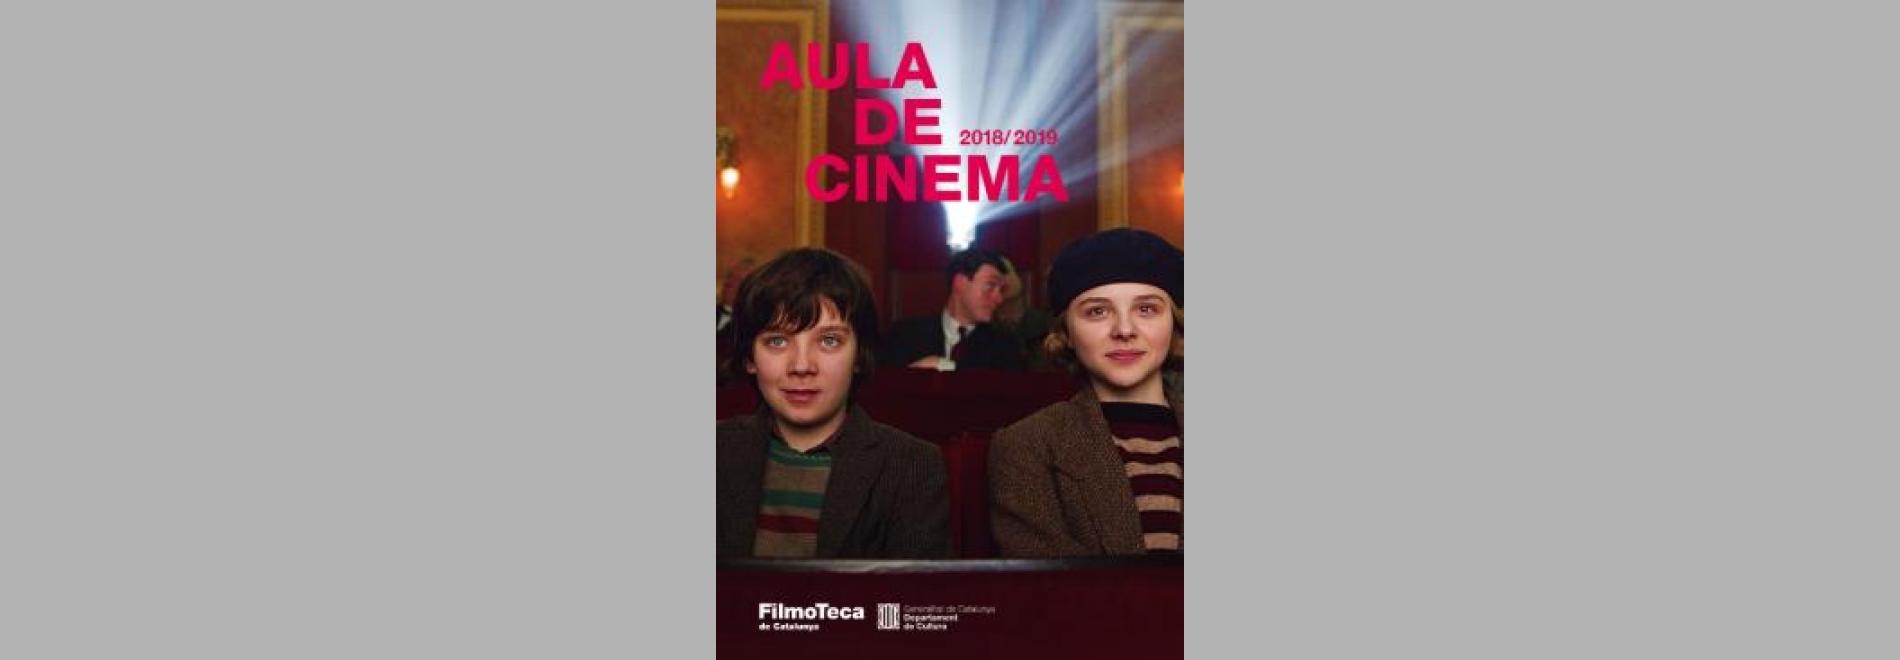 Aula de Cinema 2018-2019